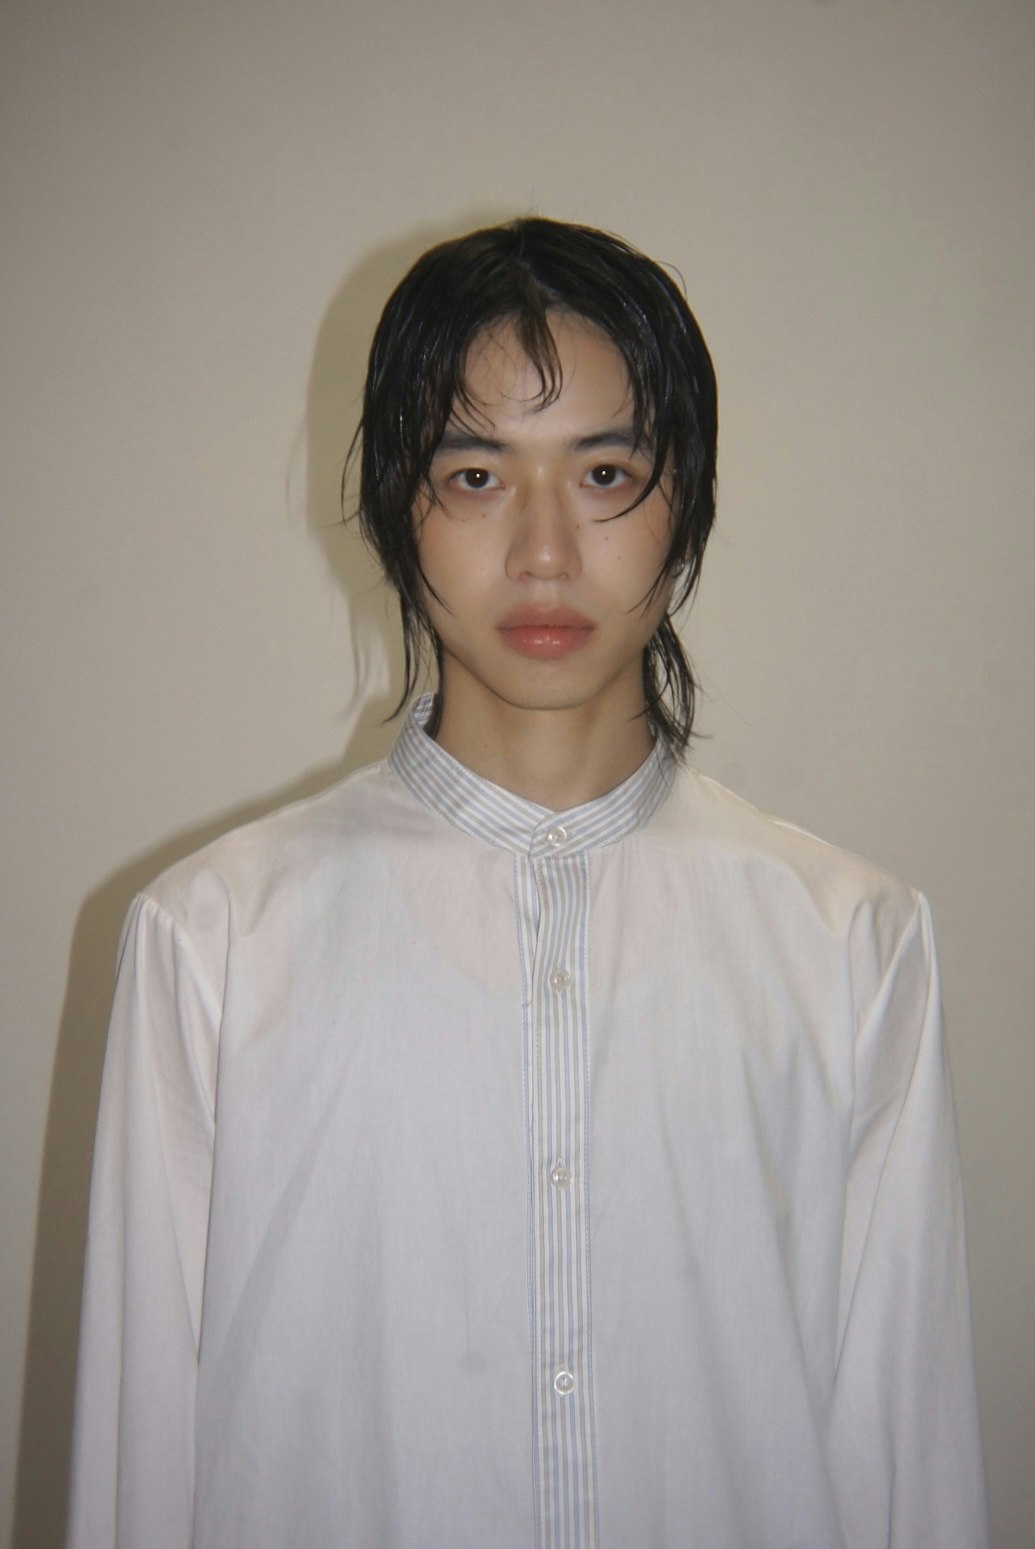 An image of Yifan Li